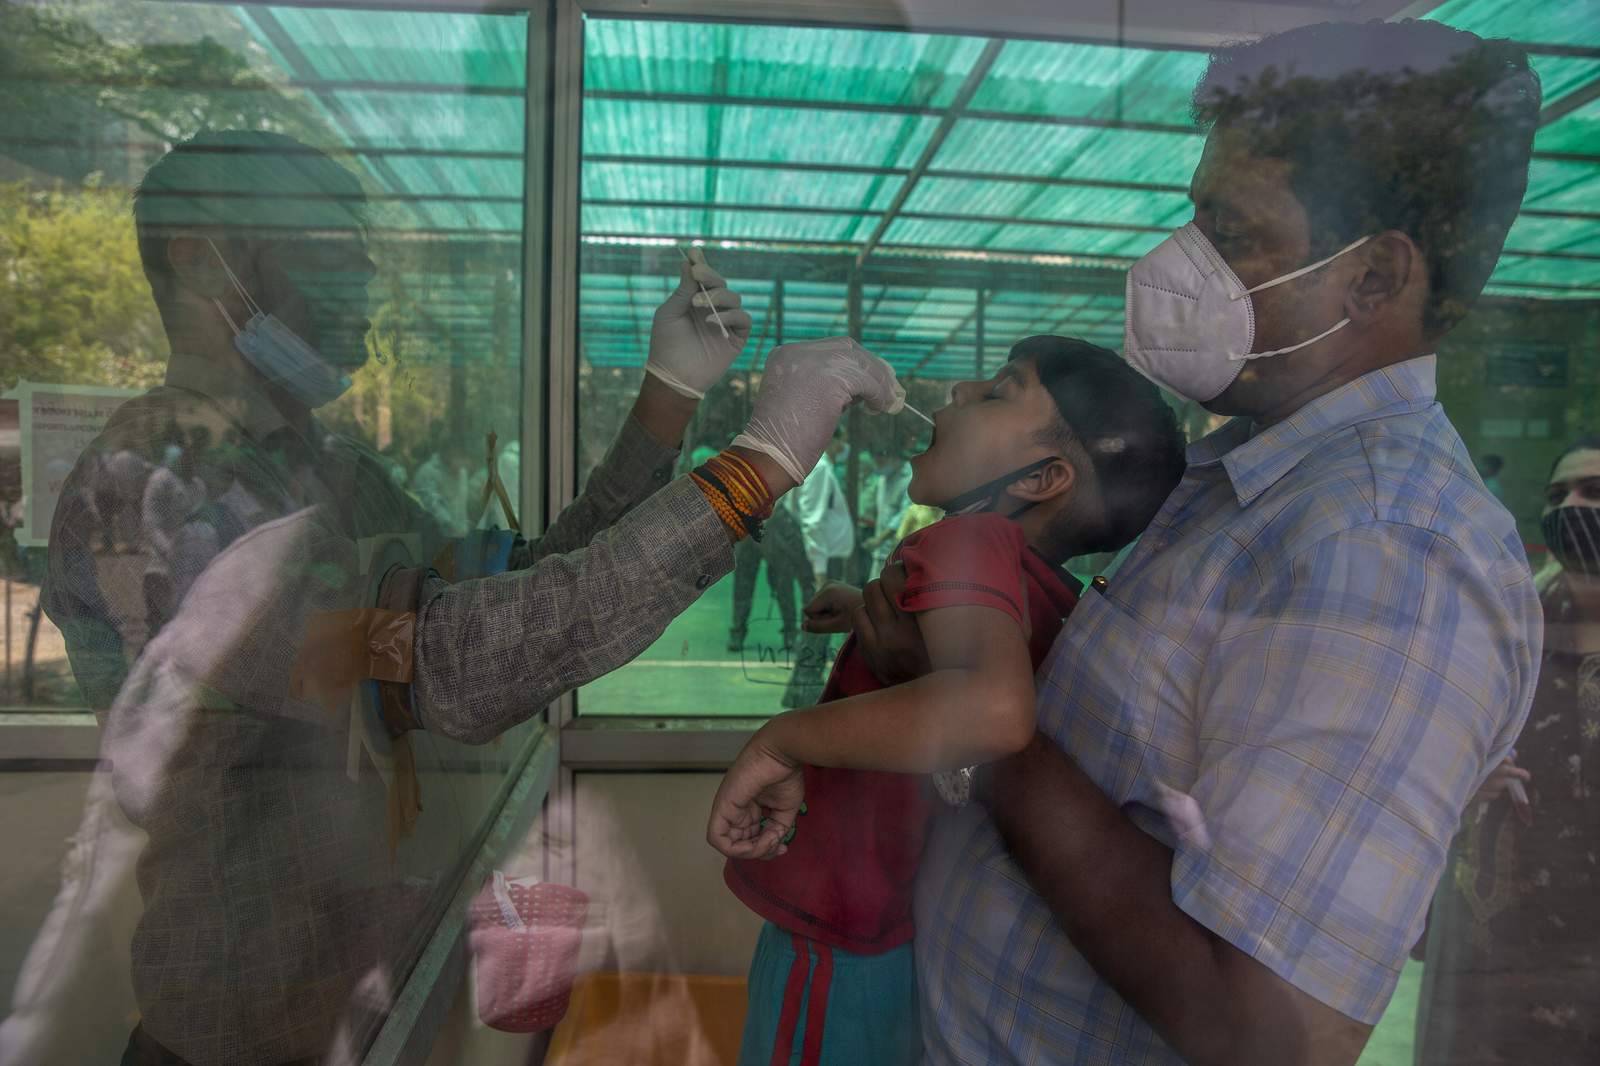 India's biggest cities shut down as new virus cases hit 200K